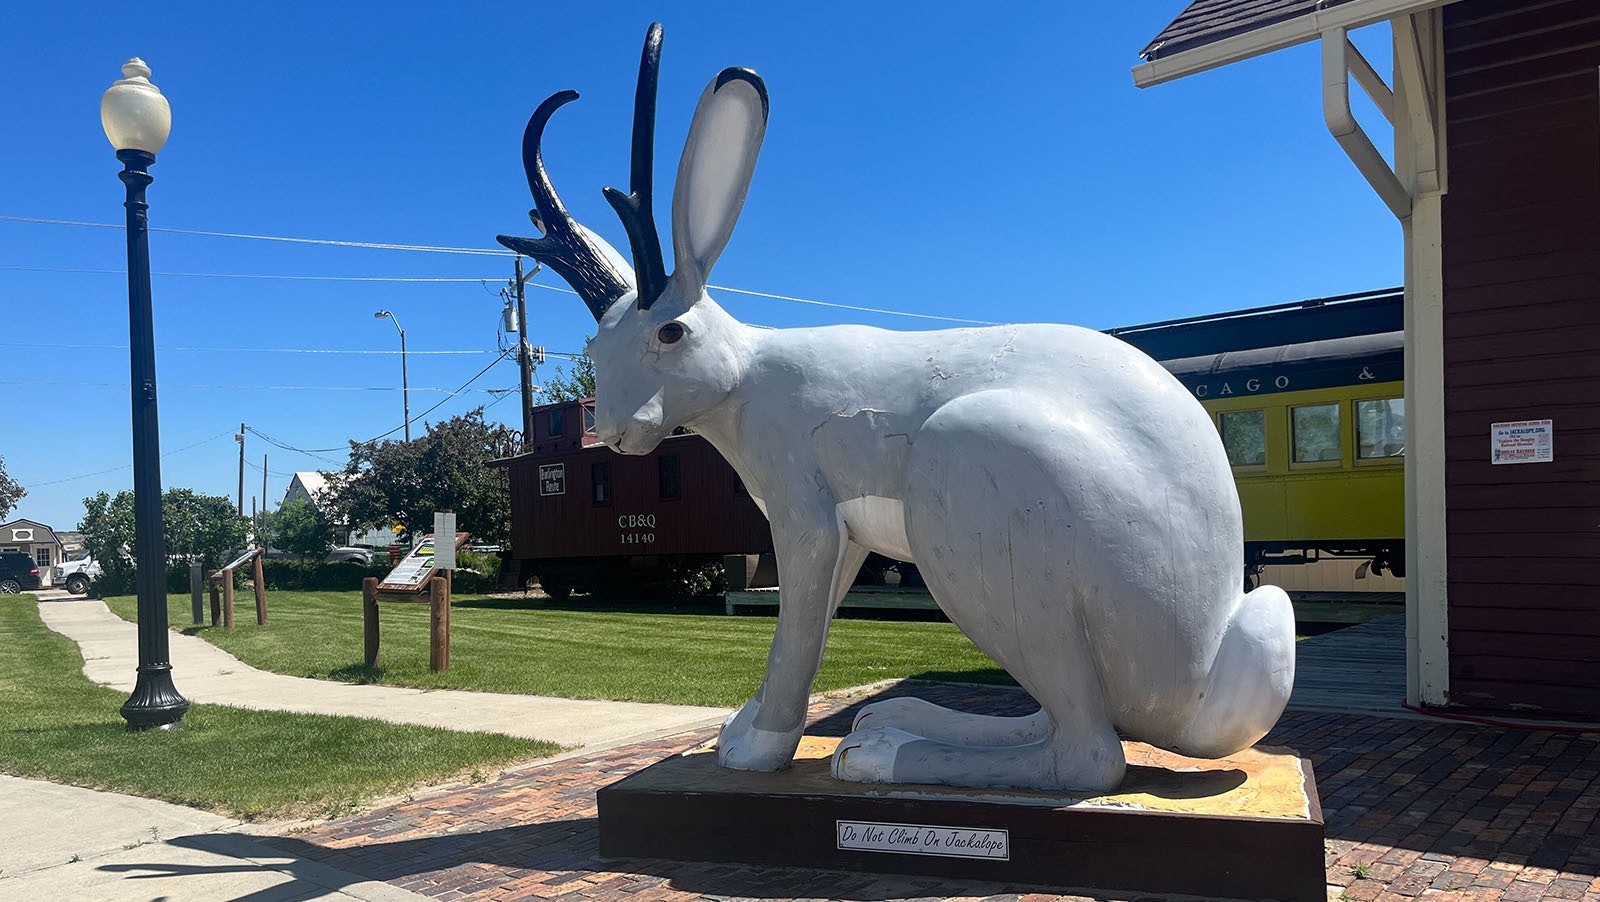 Douglas, Wyoming's dedication to the jackalope is on display around town.